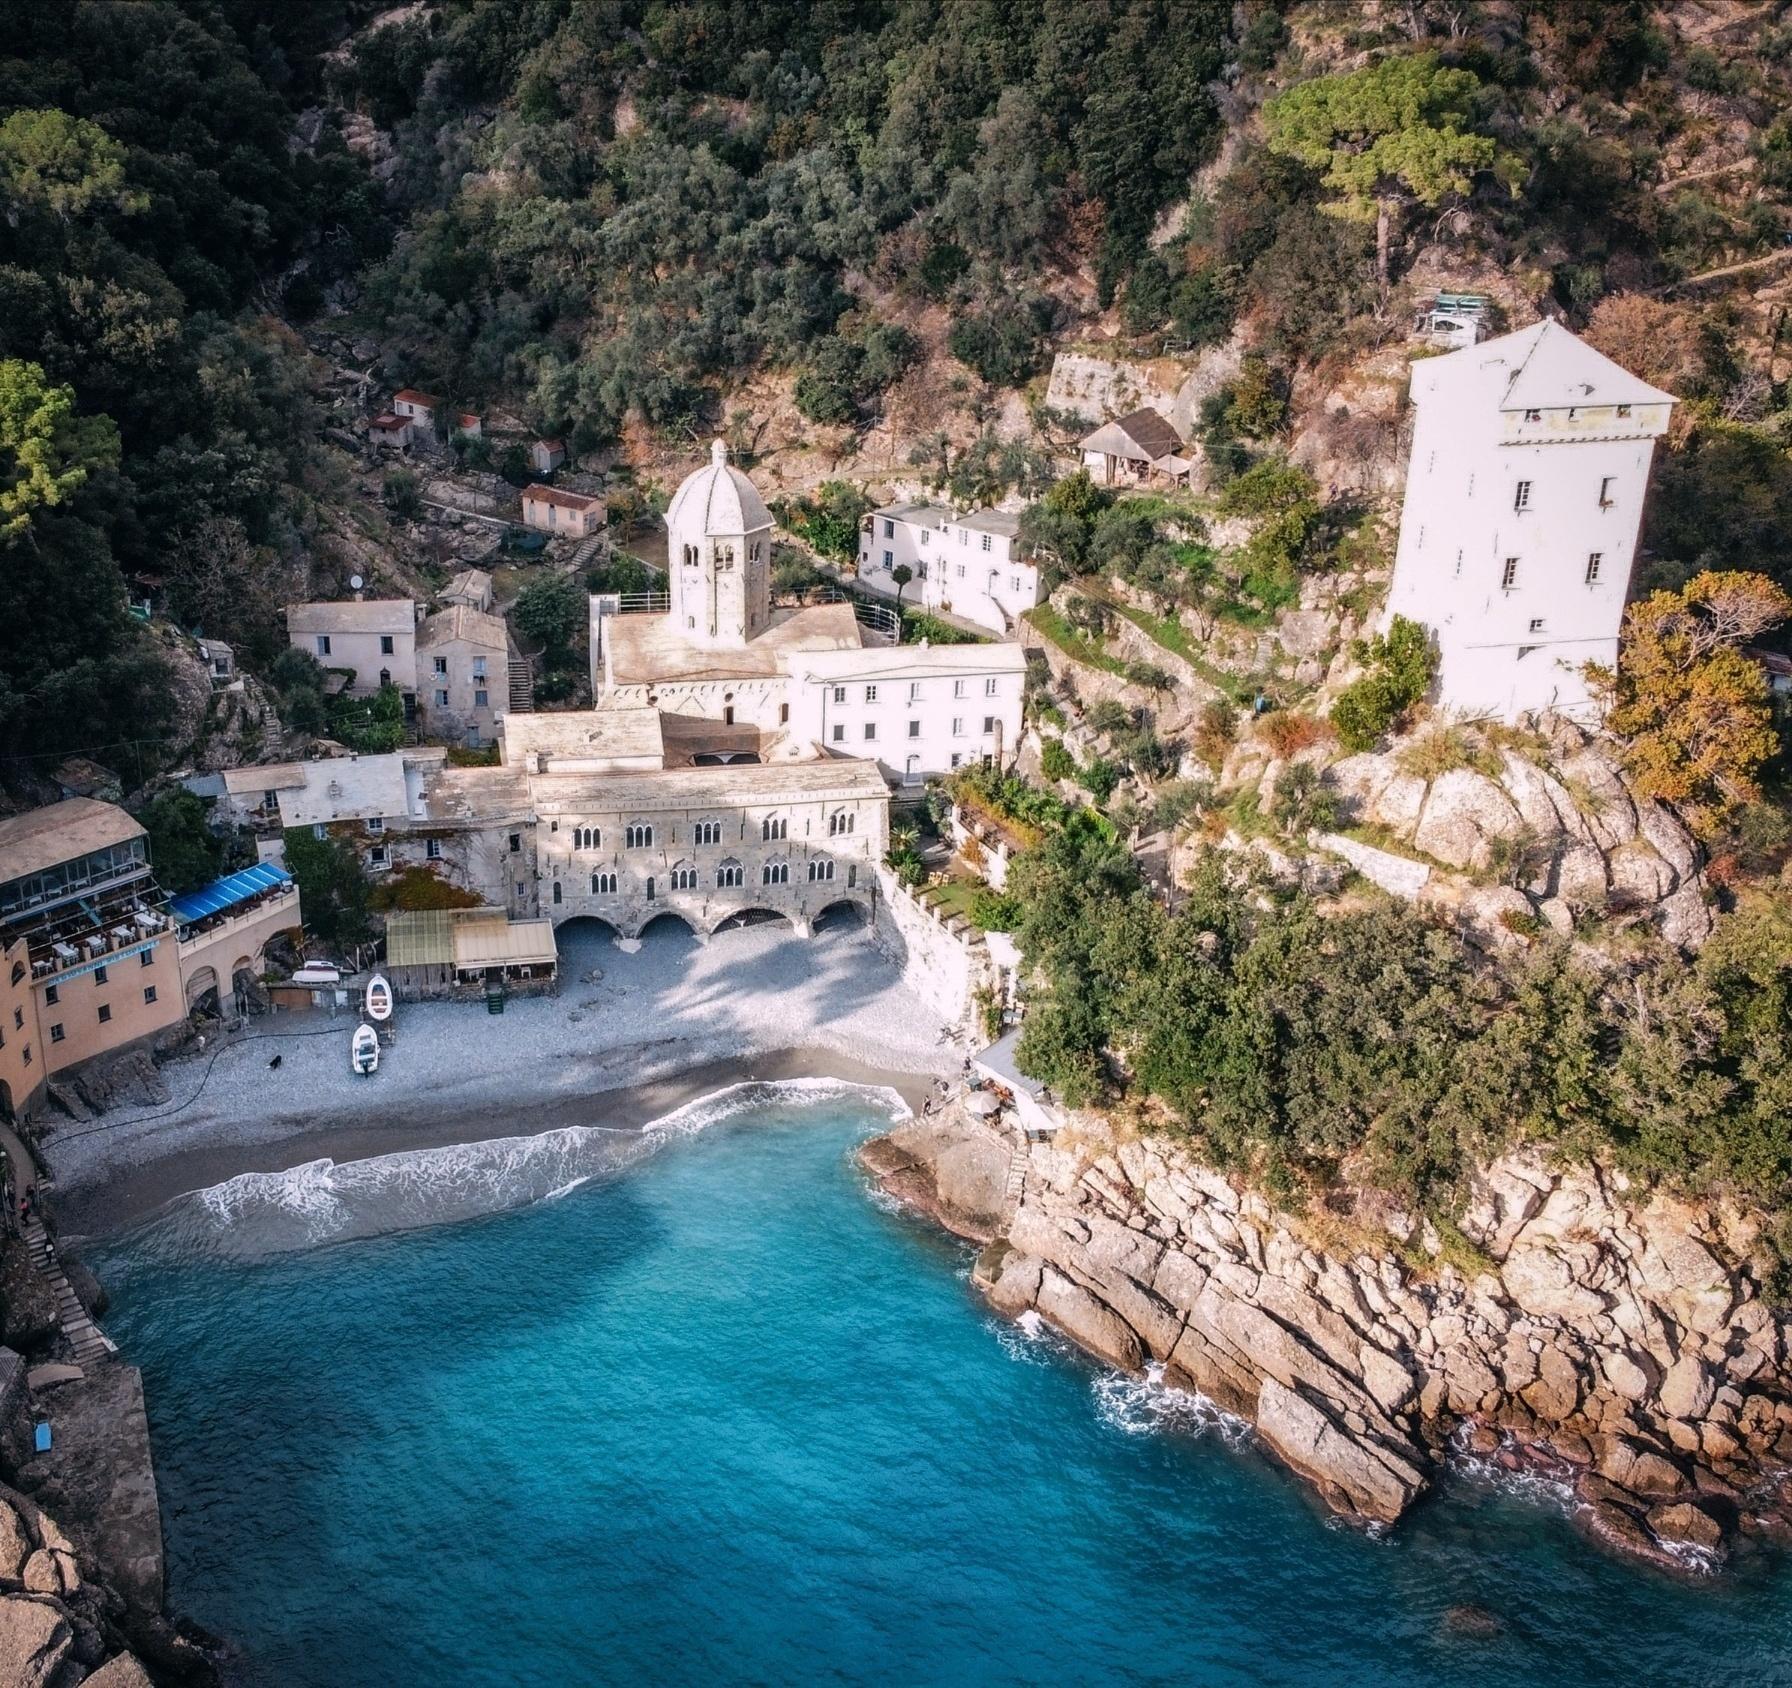 San Fruttuso, Liguria, Italy - Enrico Ottonello/Getty Images/iStockphoto